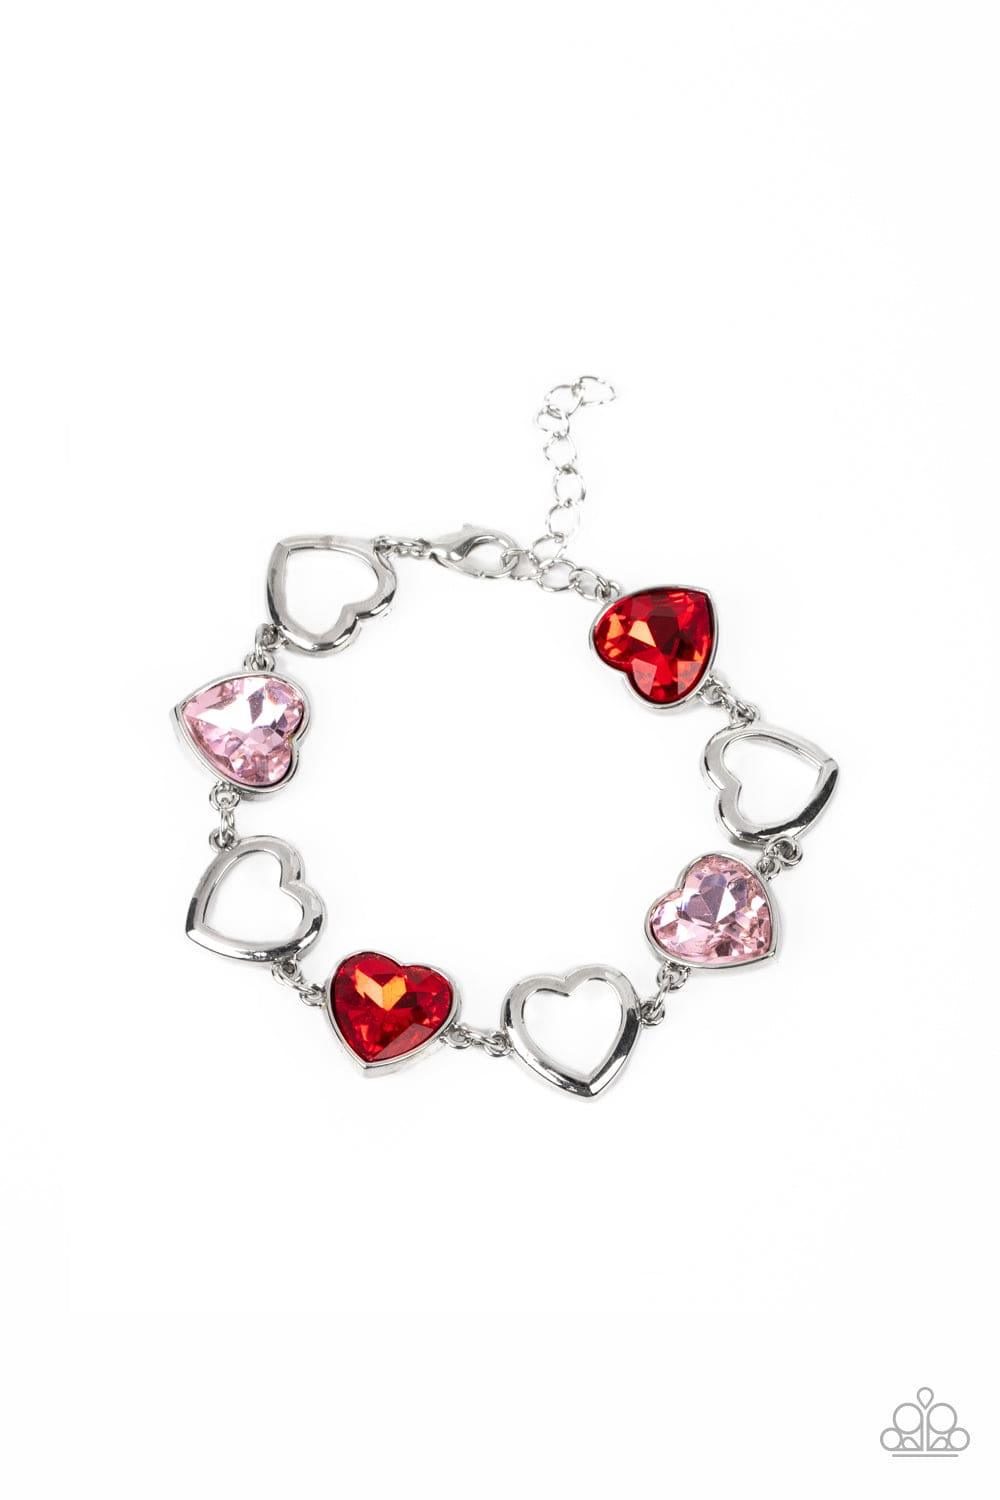 Paparazzi Accessories - Sentimental Sweethearts - Multicolor Bracelet - Bling by JessieK